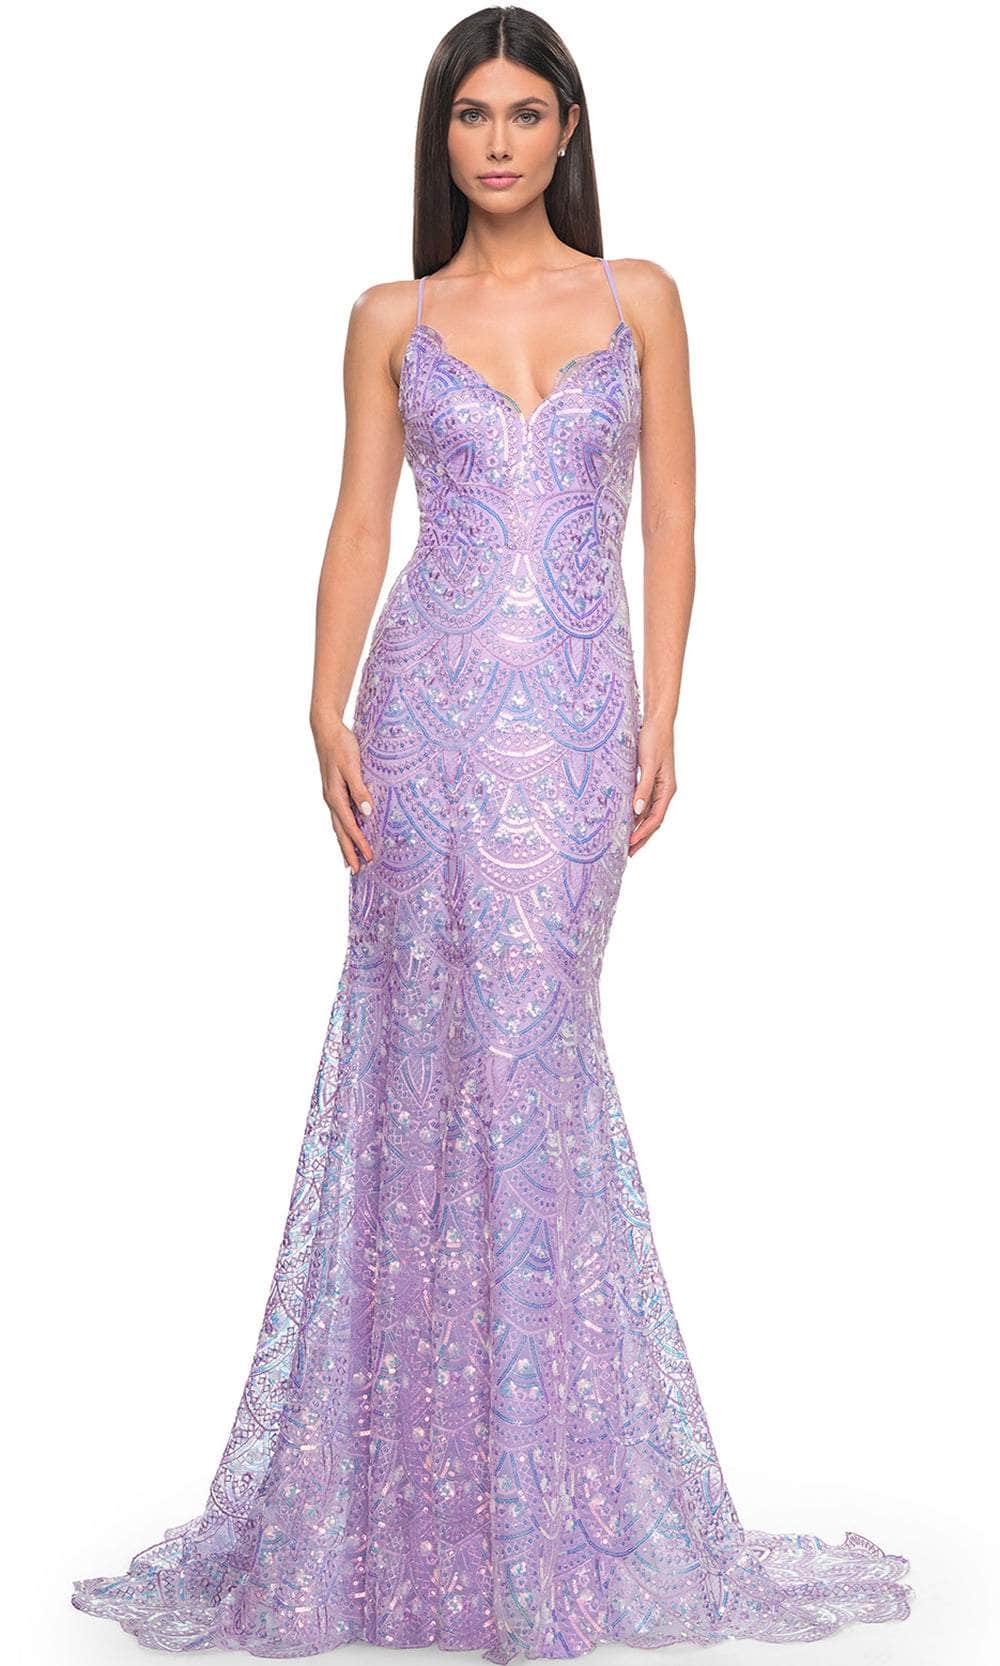 La Femme 31865 - Sequin Design Prom Dress Special Occasion Dress 00 / Light Periwinkle